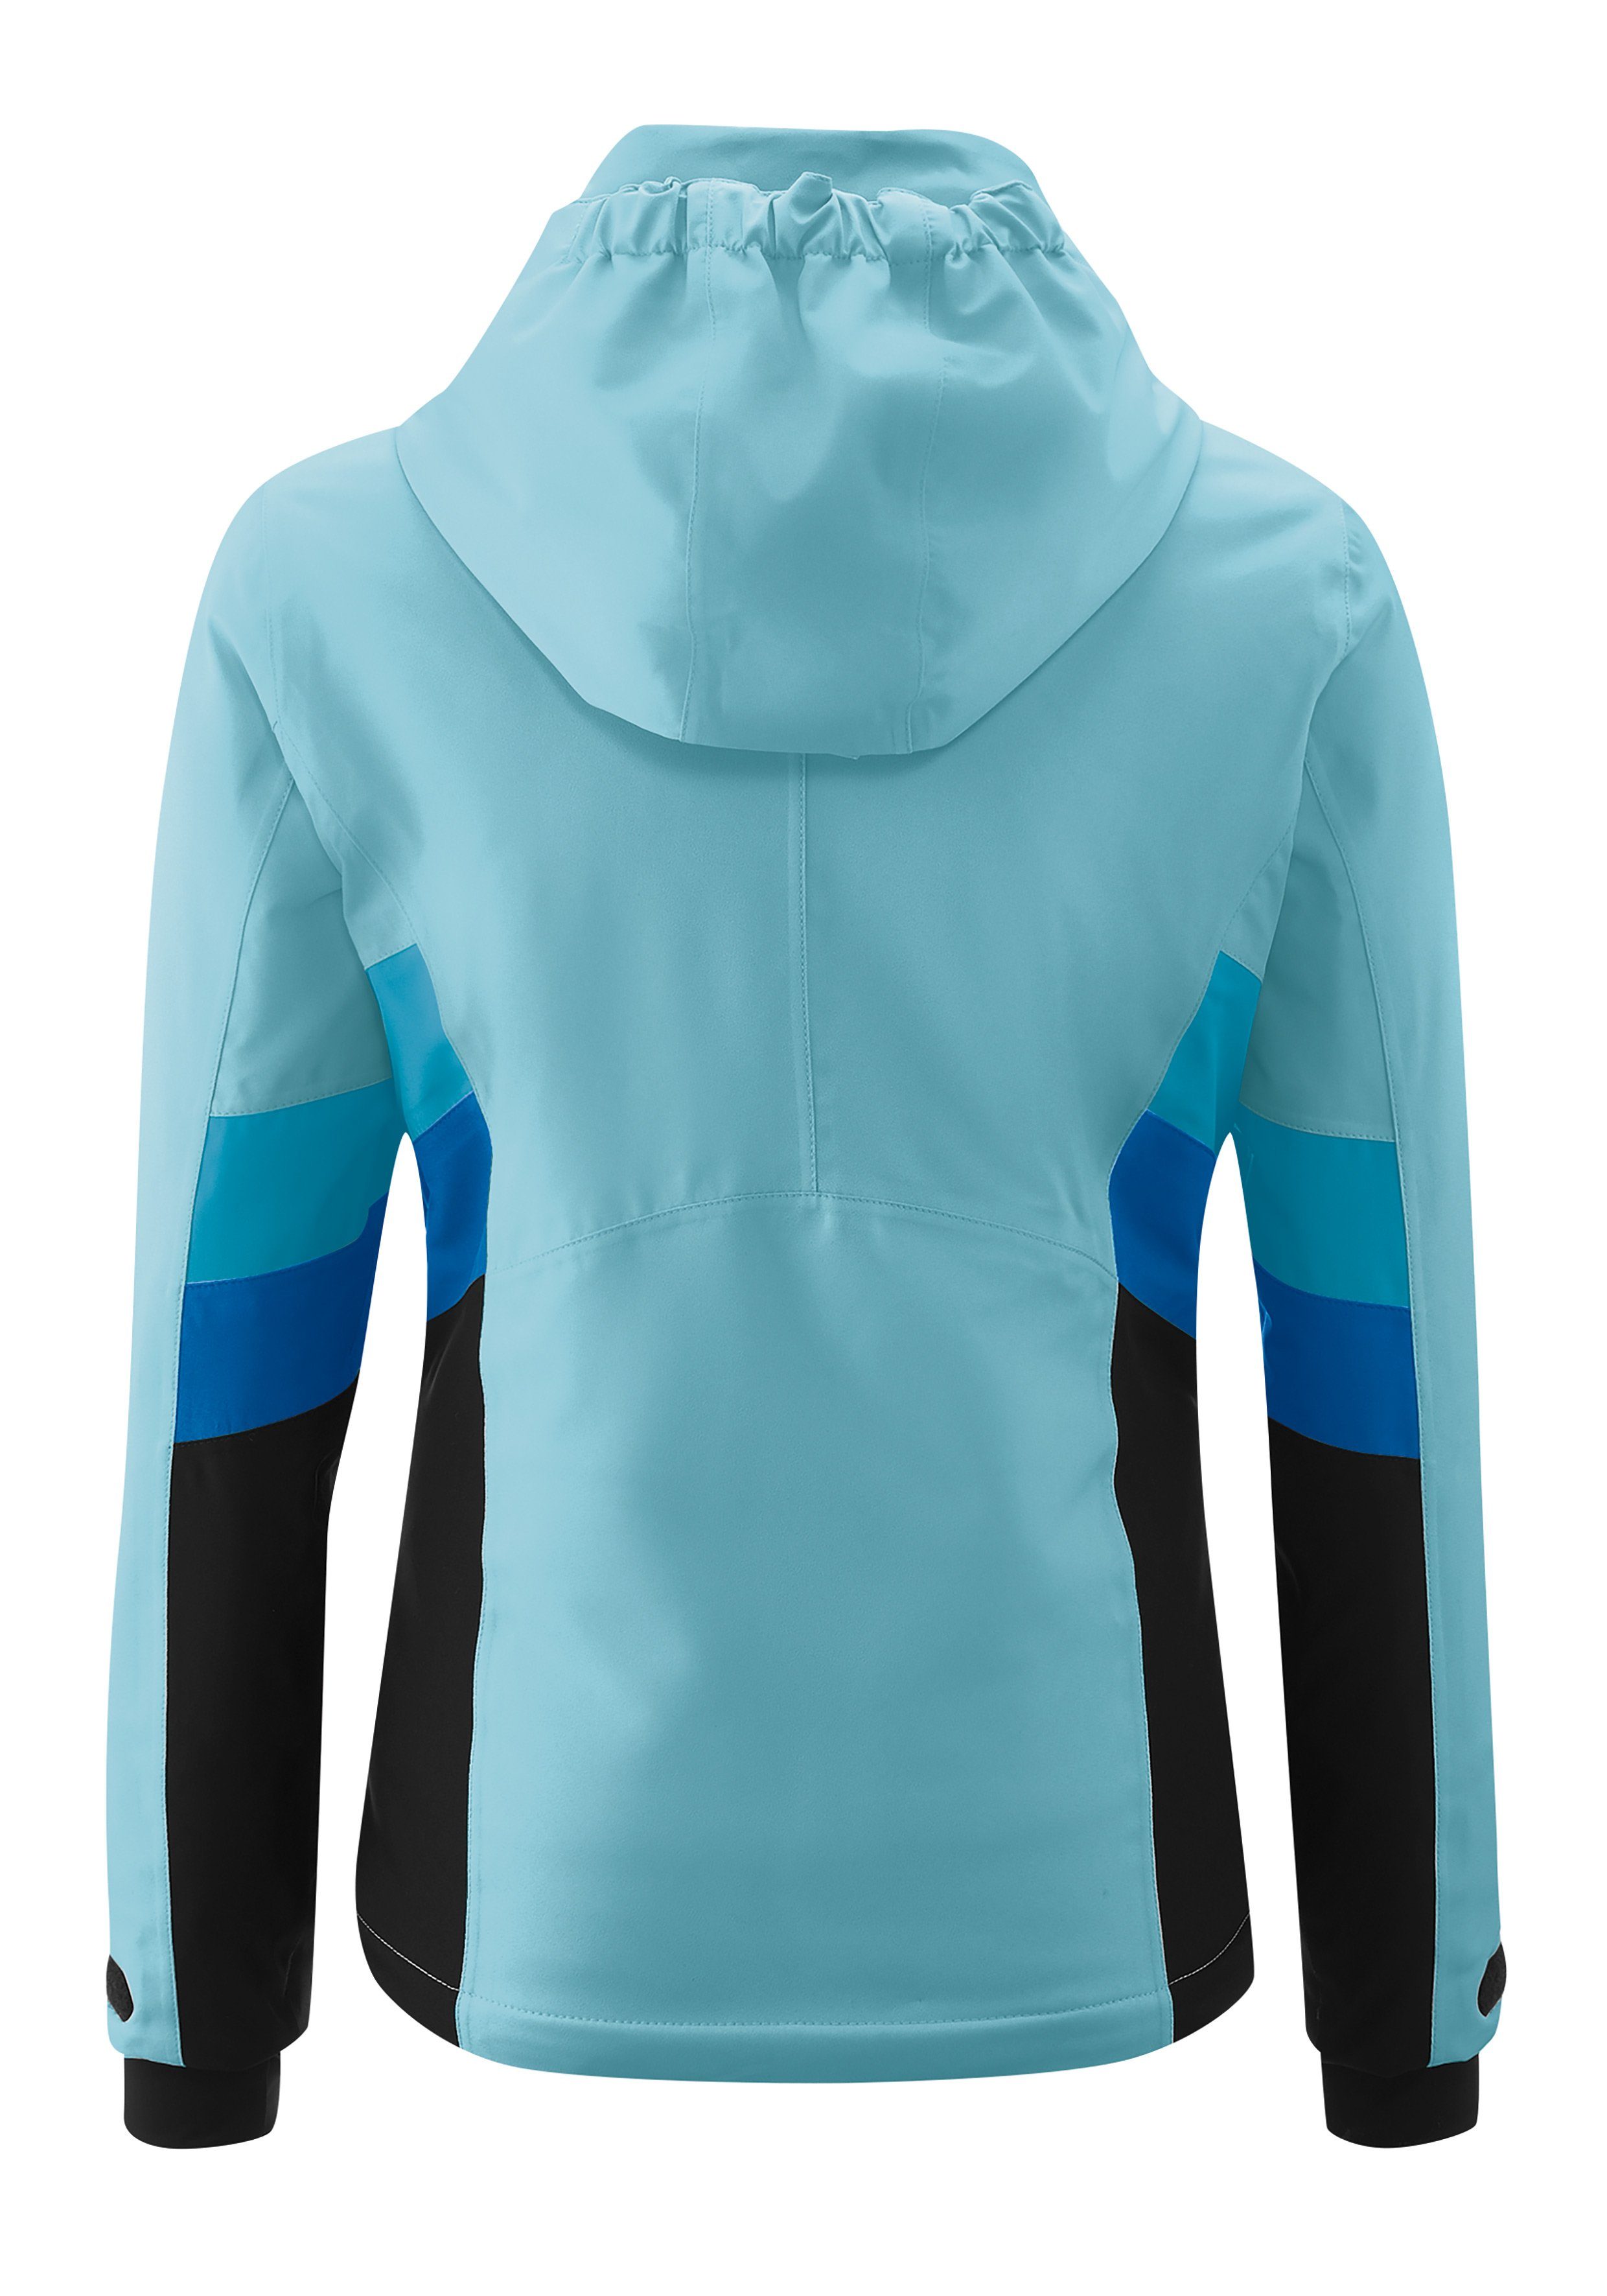 Maier Sports Skijacke Kandry Girls Funktionale dynamischem babyblau Design mit Kinderskijacke